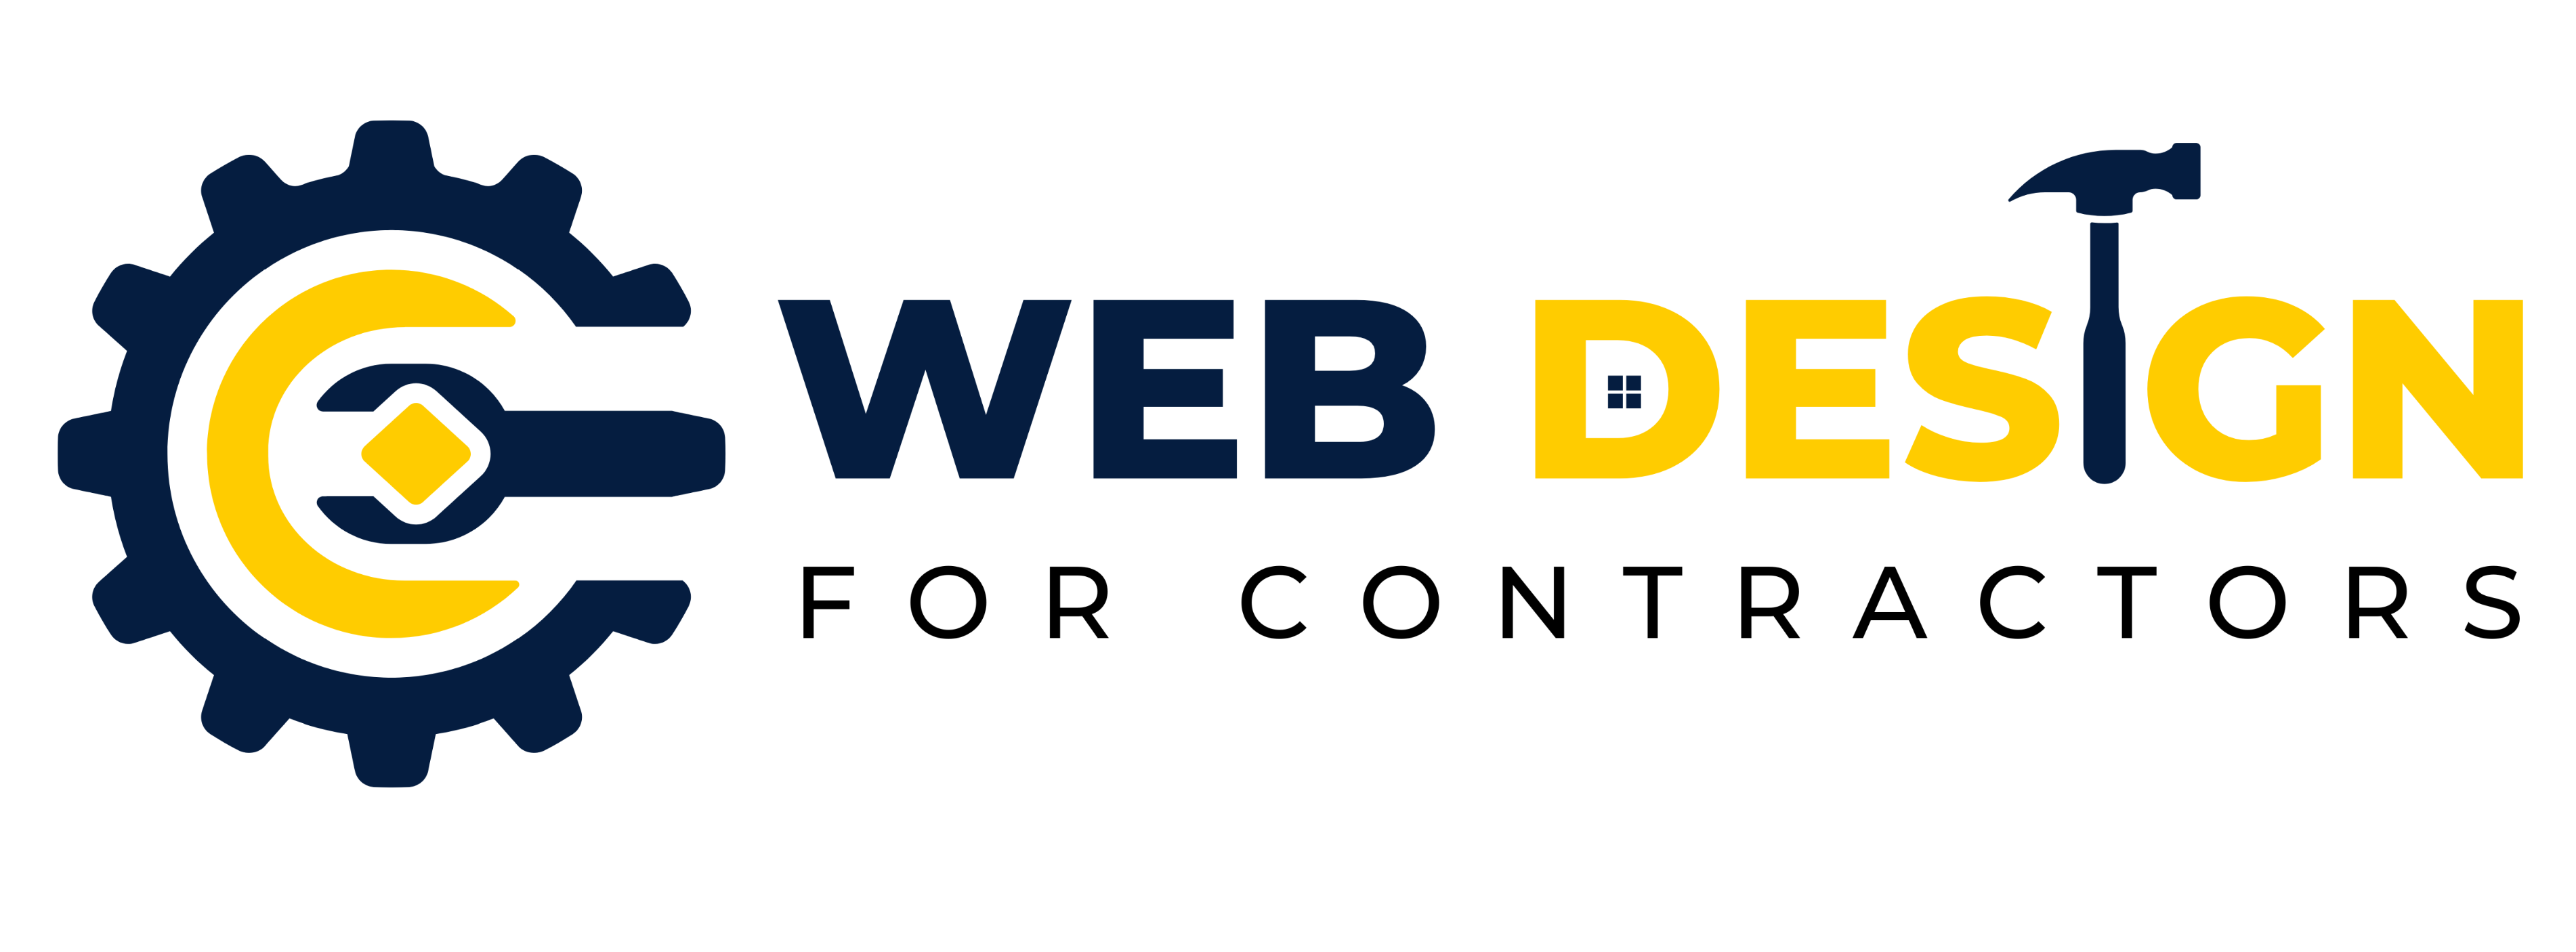 Web Design For Contractors